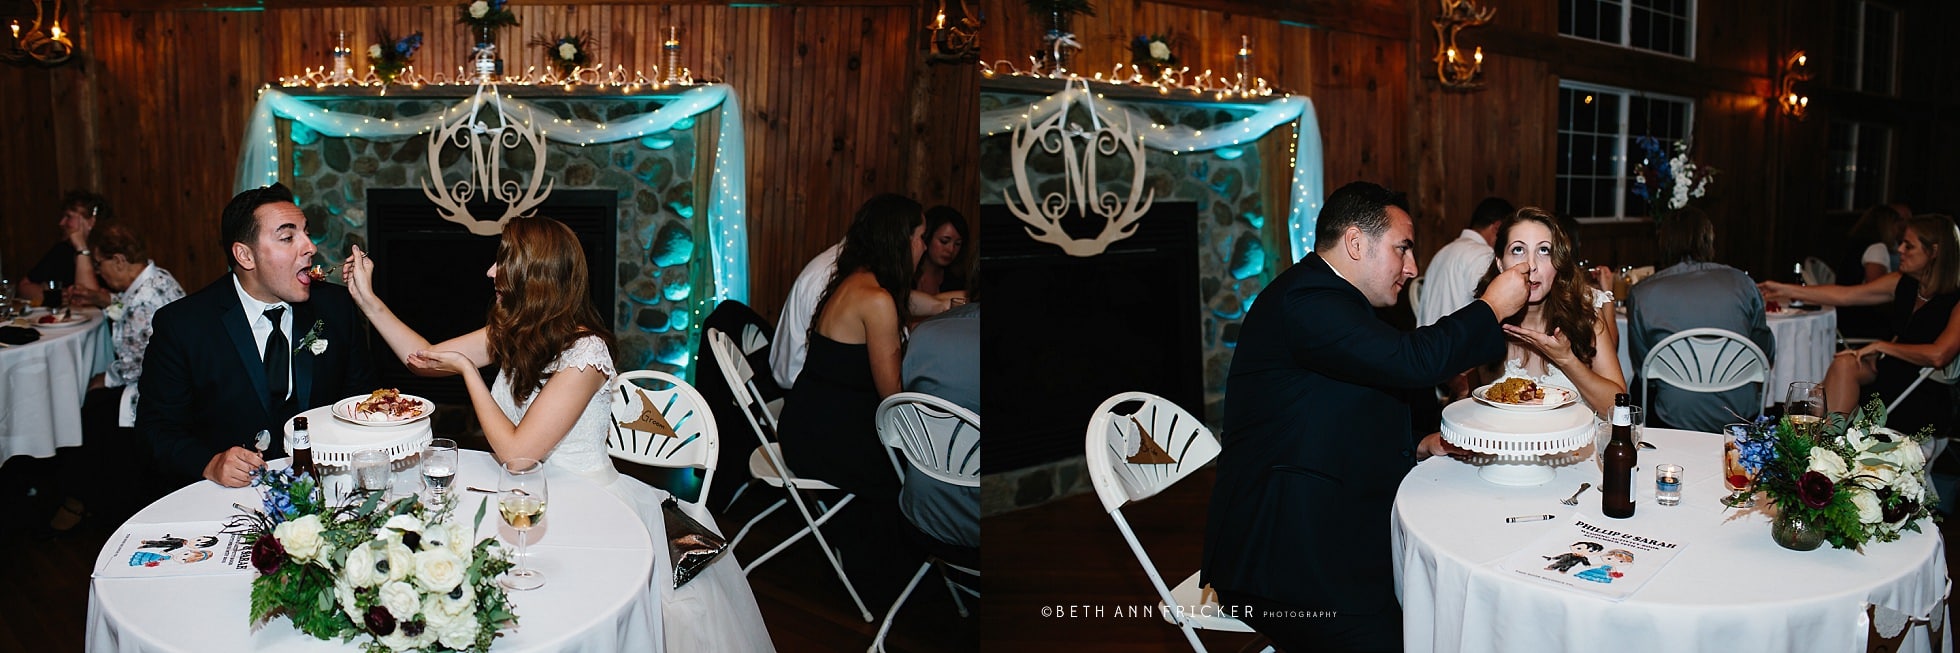 Reception Inn on Newfound Lake Wedding Photographer